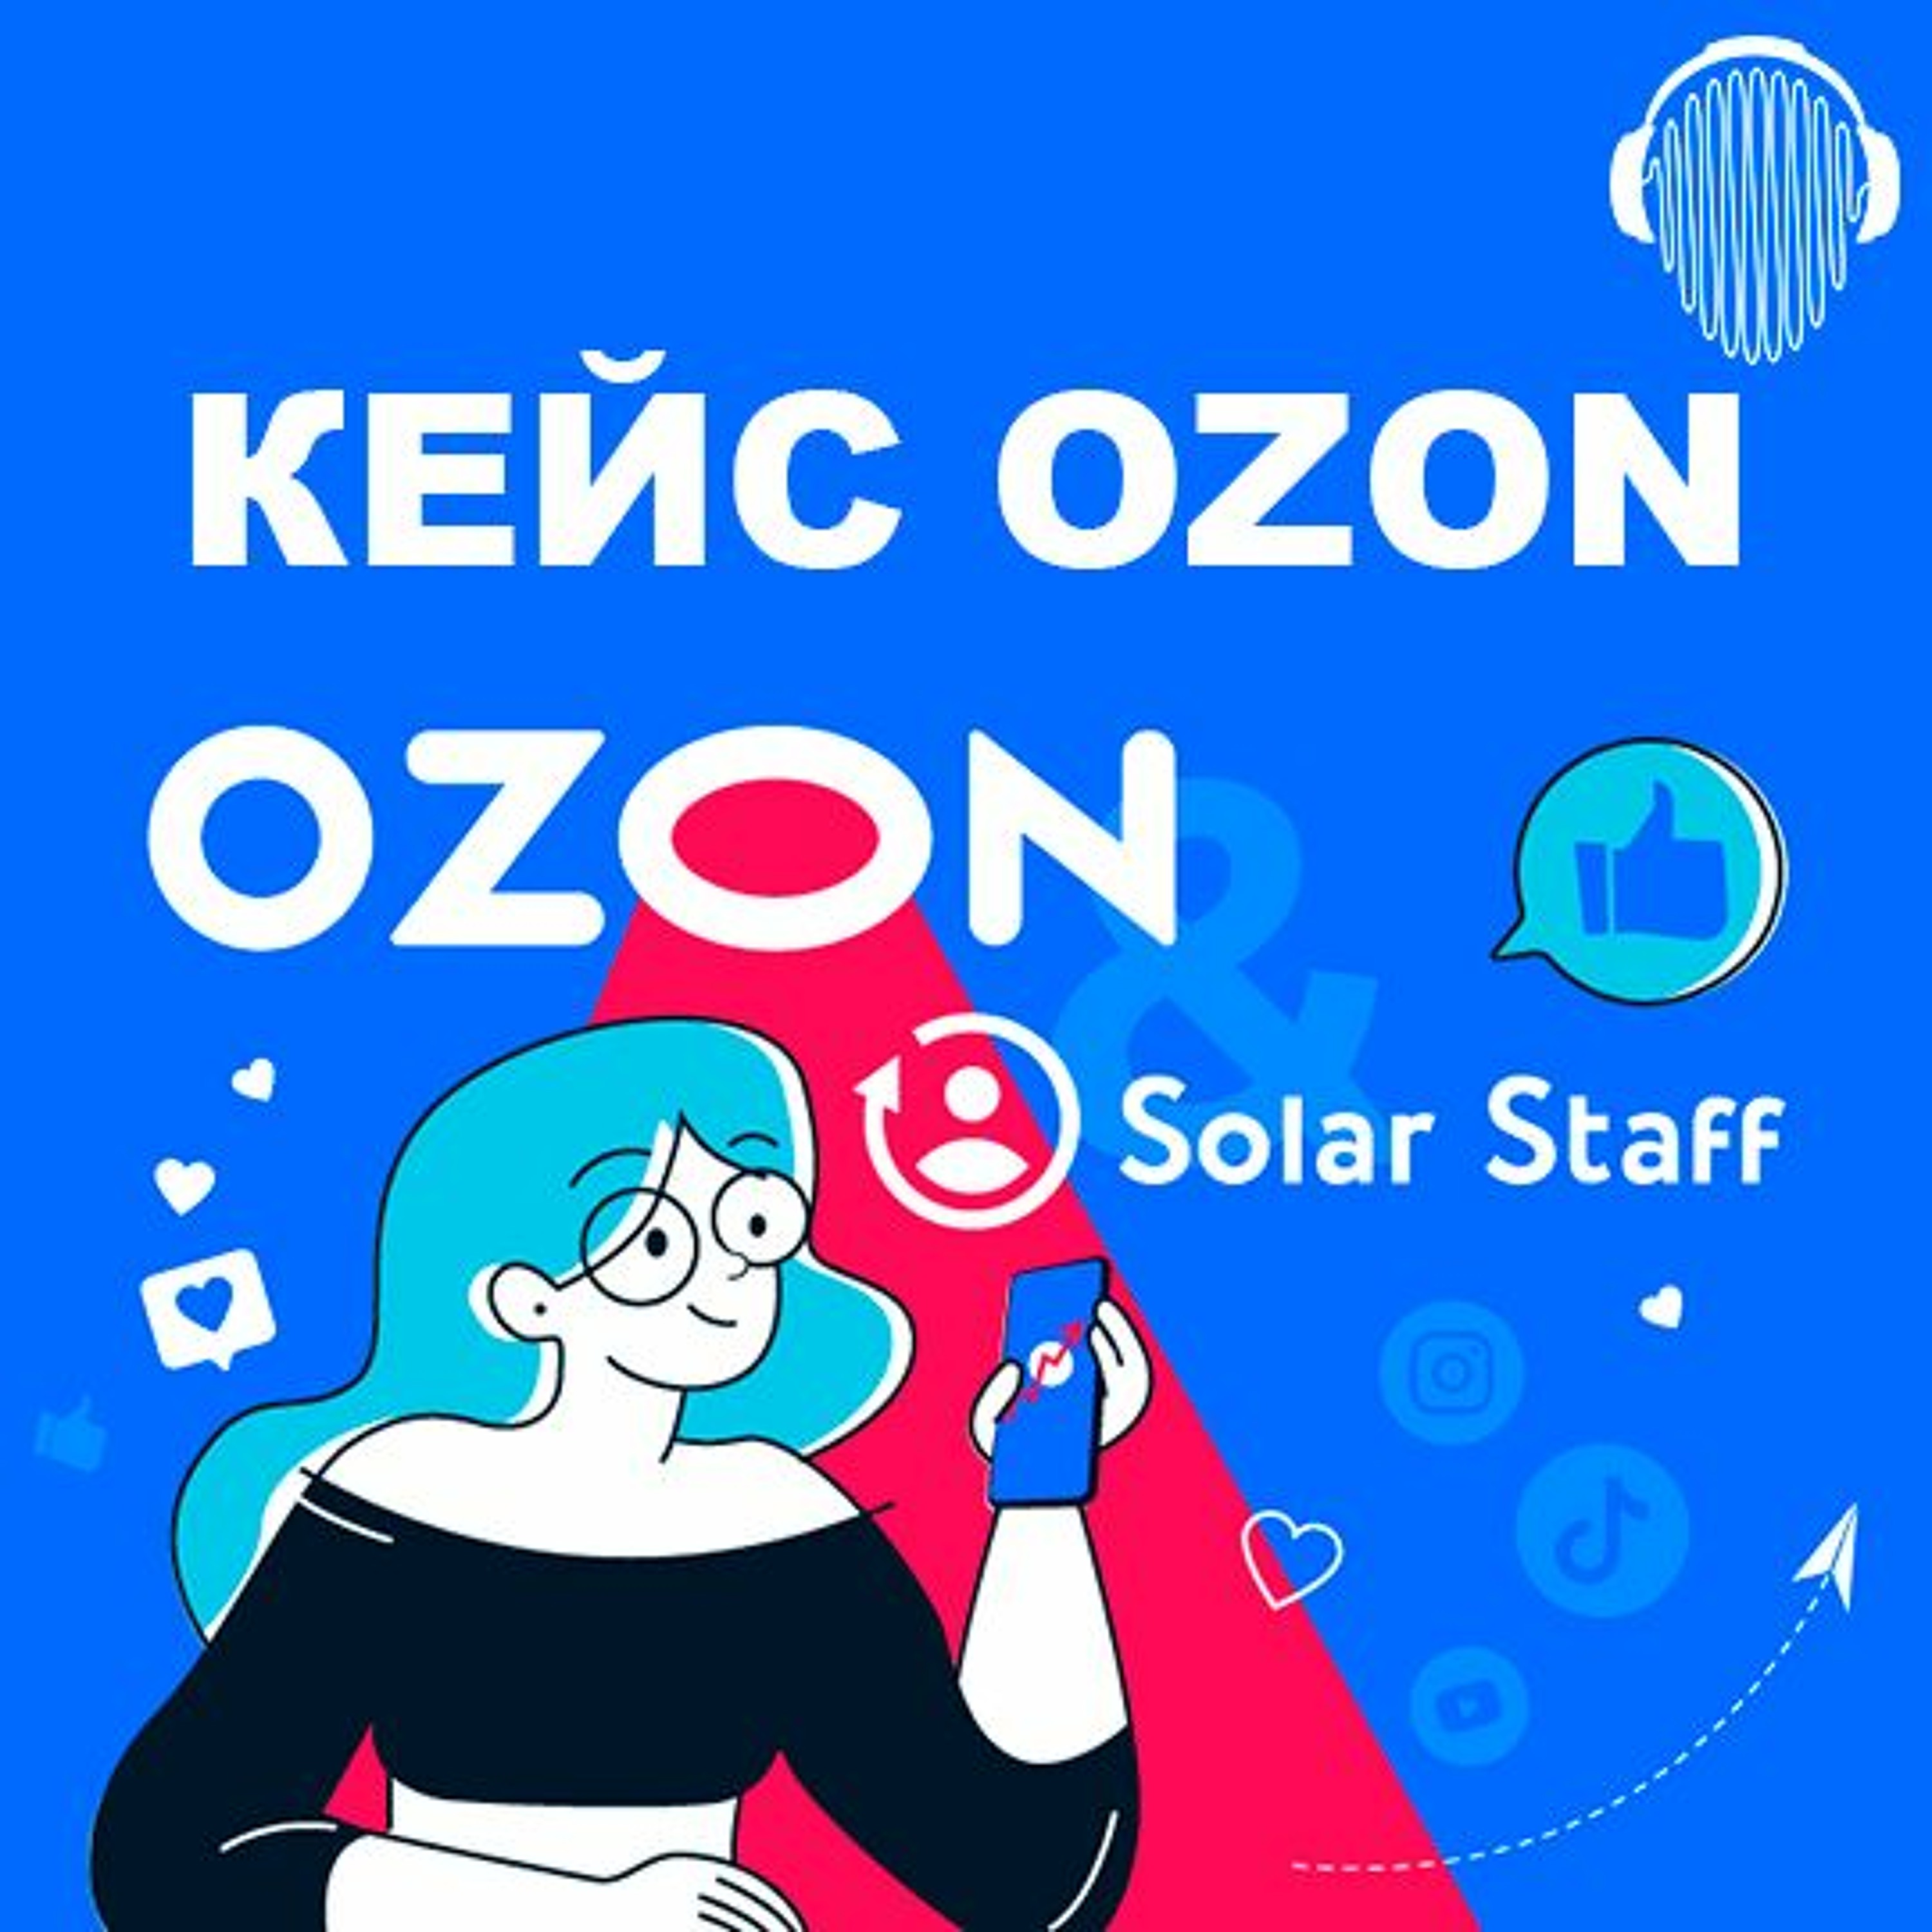 Solarstaff. OZON staff. Solar staff логотип. Реклама Озон. Кейс Озон.